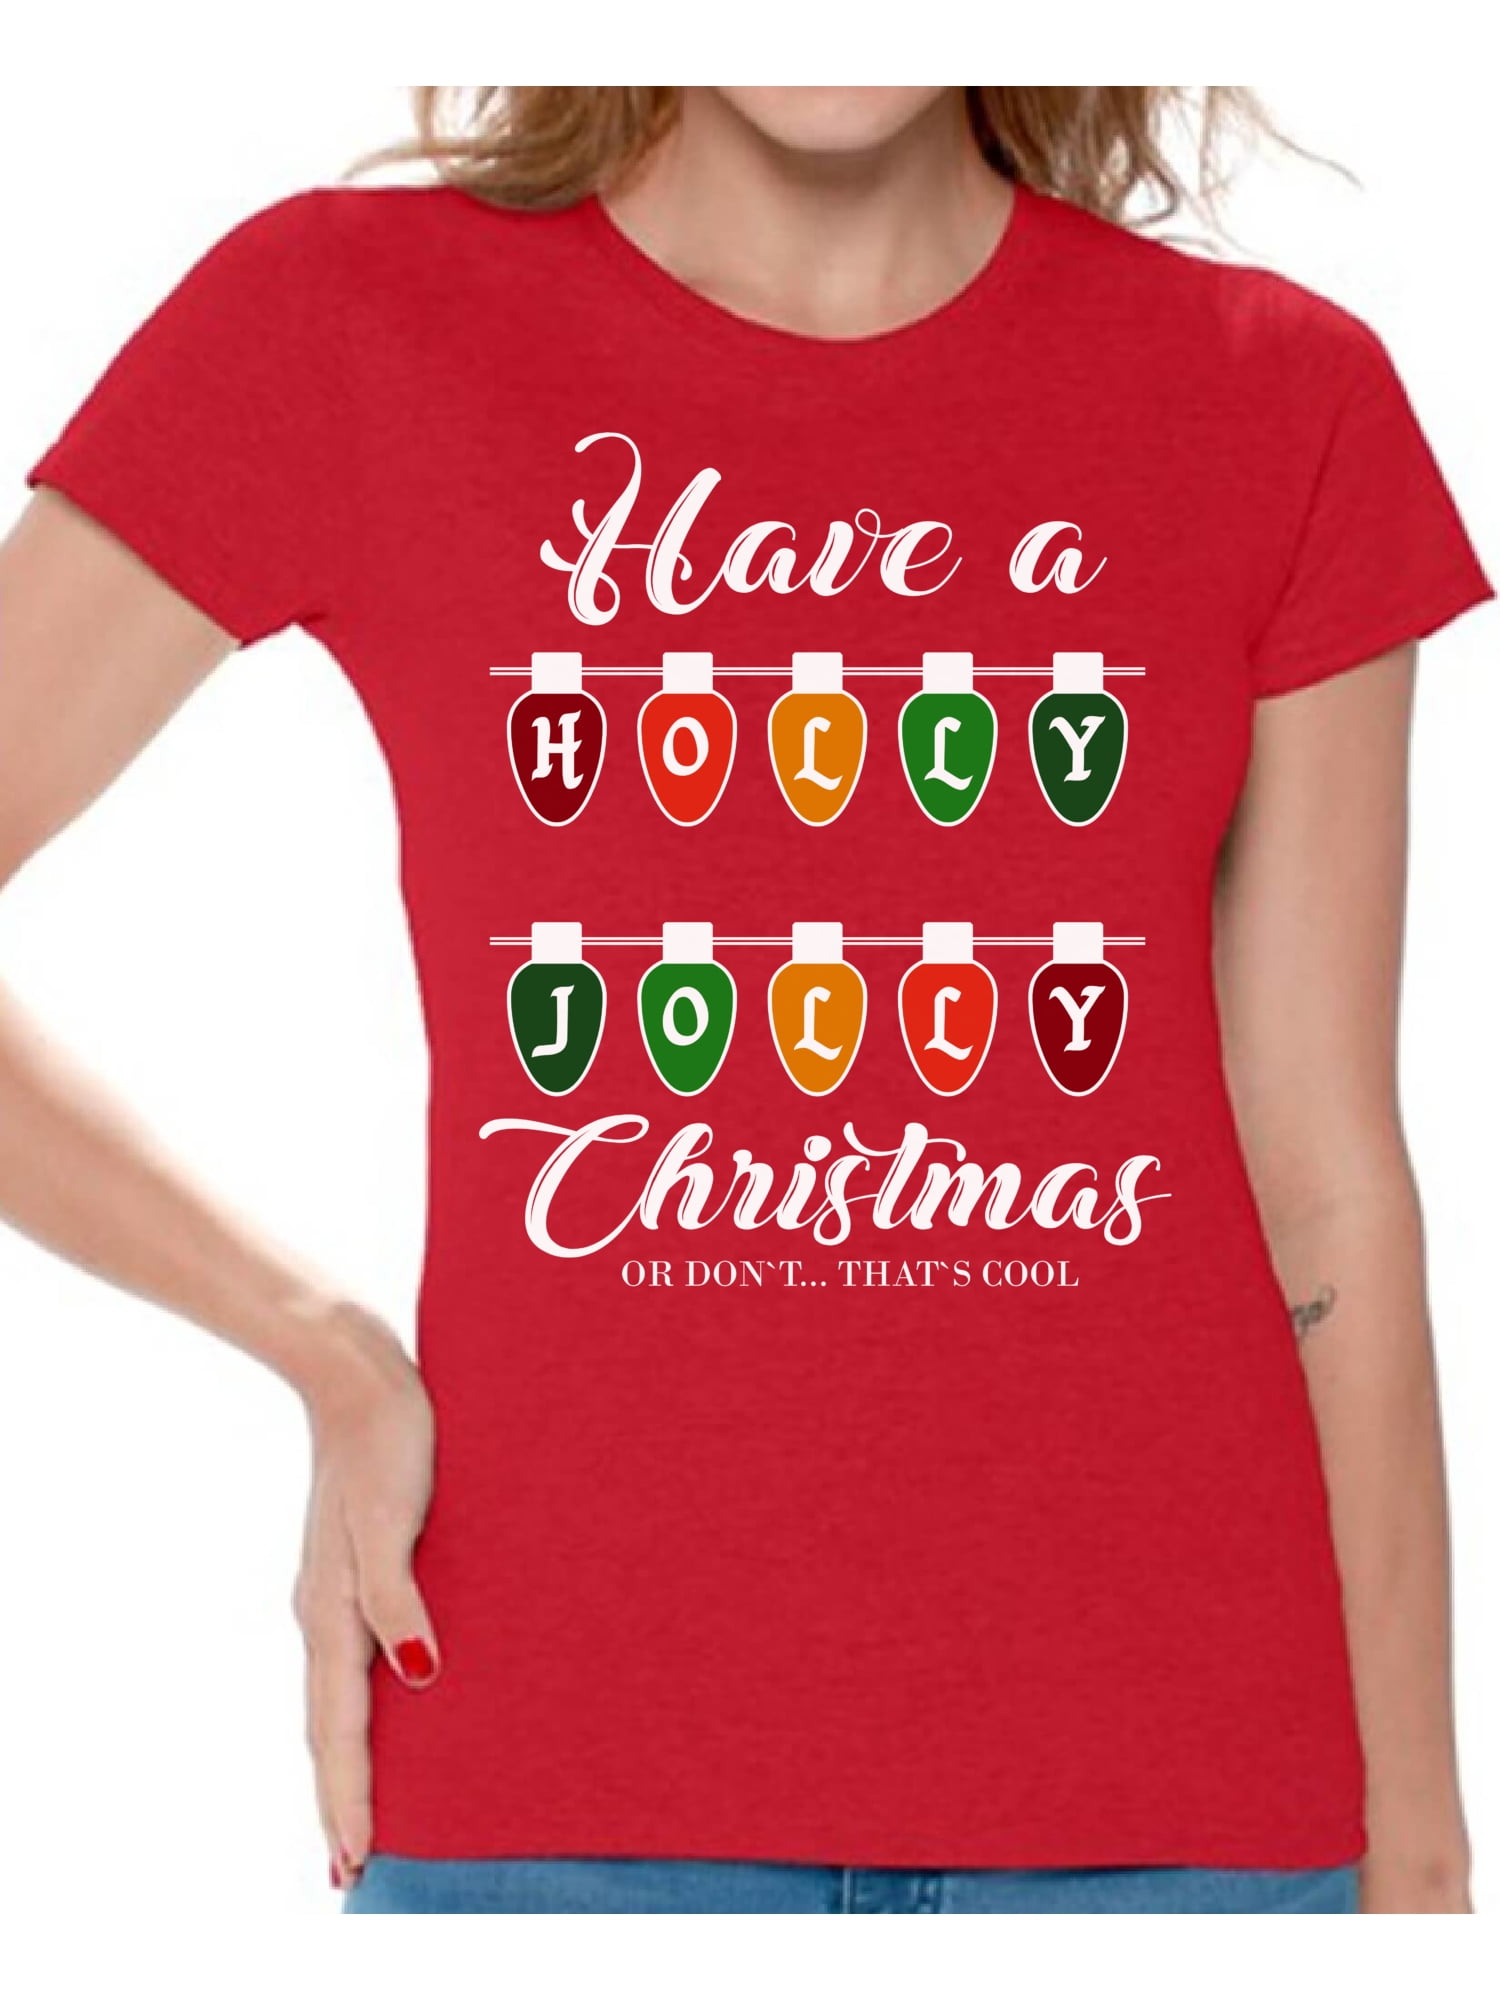 Awkward Styles Ugly Christmas Shirts for Women Xmas Holly Jolly